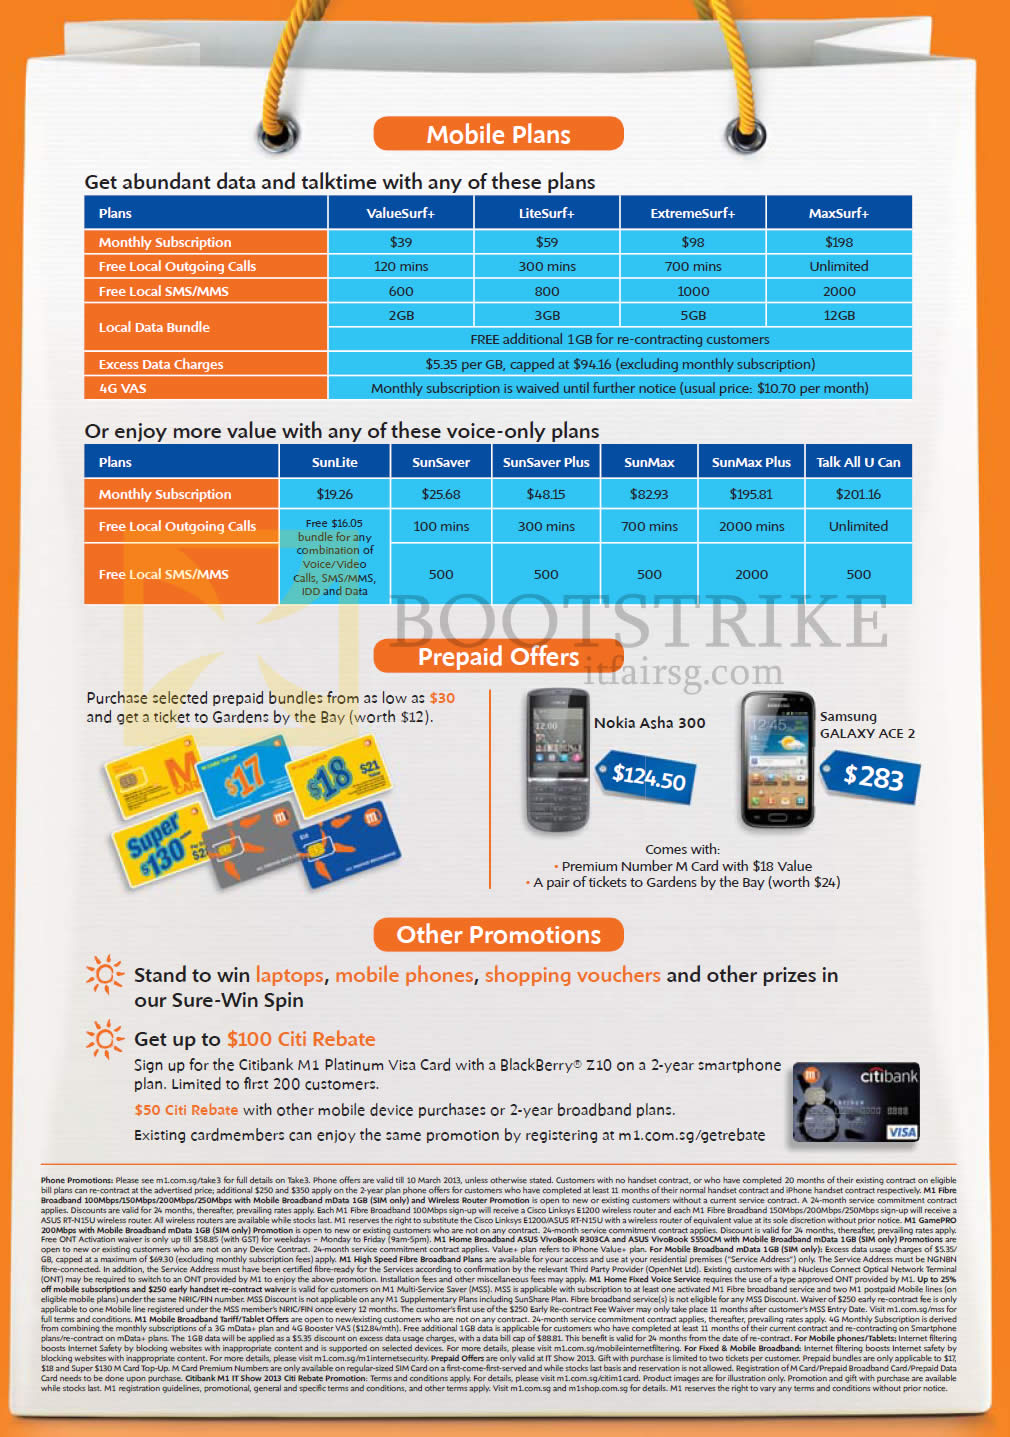 IT SHOW 2013 price list image brochure of M1 Mobile Plans ValueSurf LiteSurf ExtremeSurf MaxSurf, SunLite SunSaver, M Card Prepaid Nokia Asha 300, Samsung Galaxy Ace 2, Citibank Citi Rebate